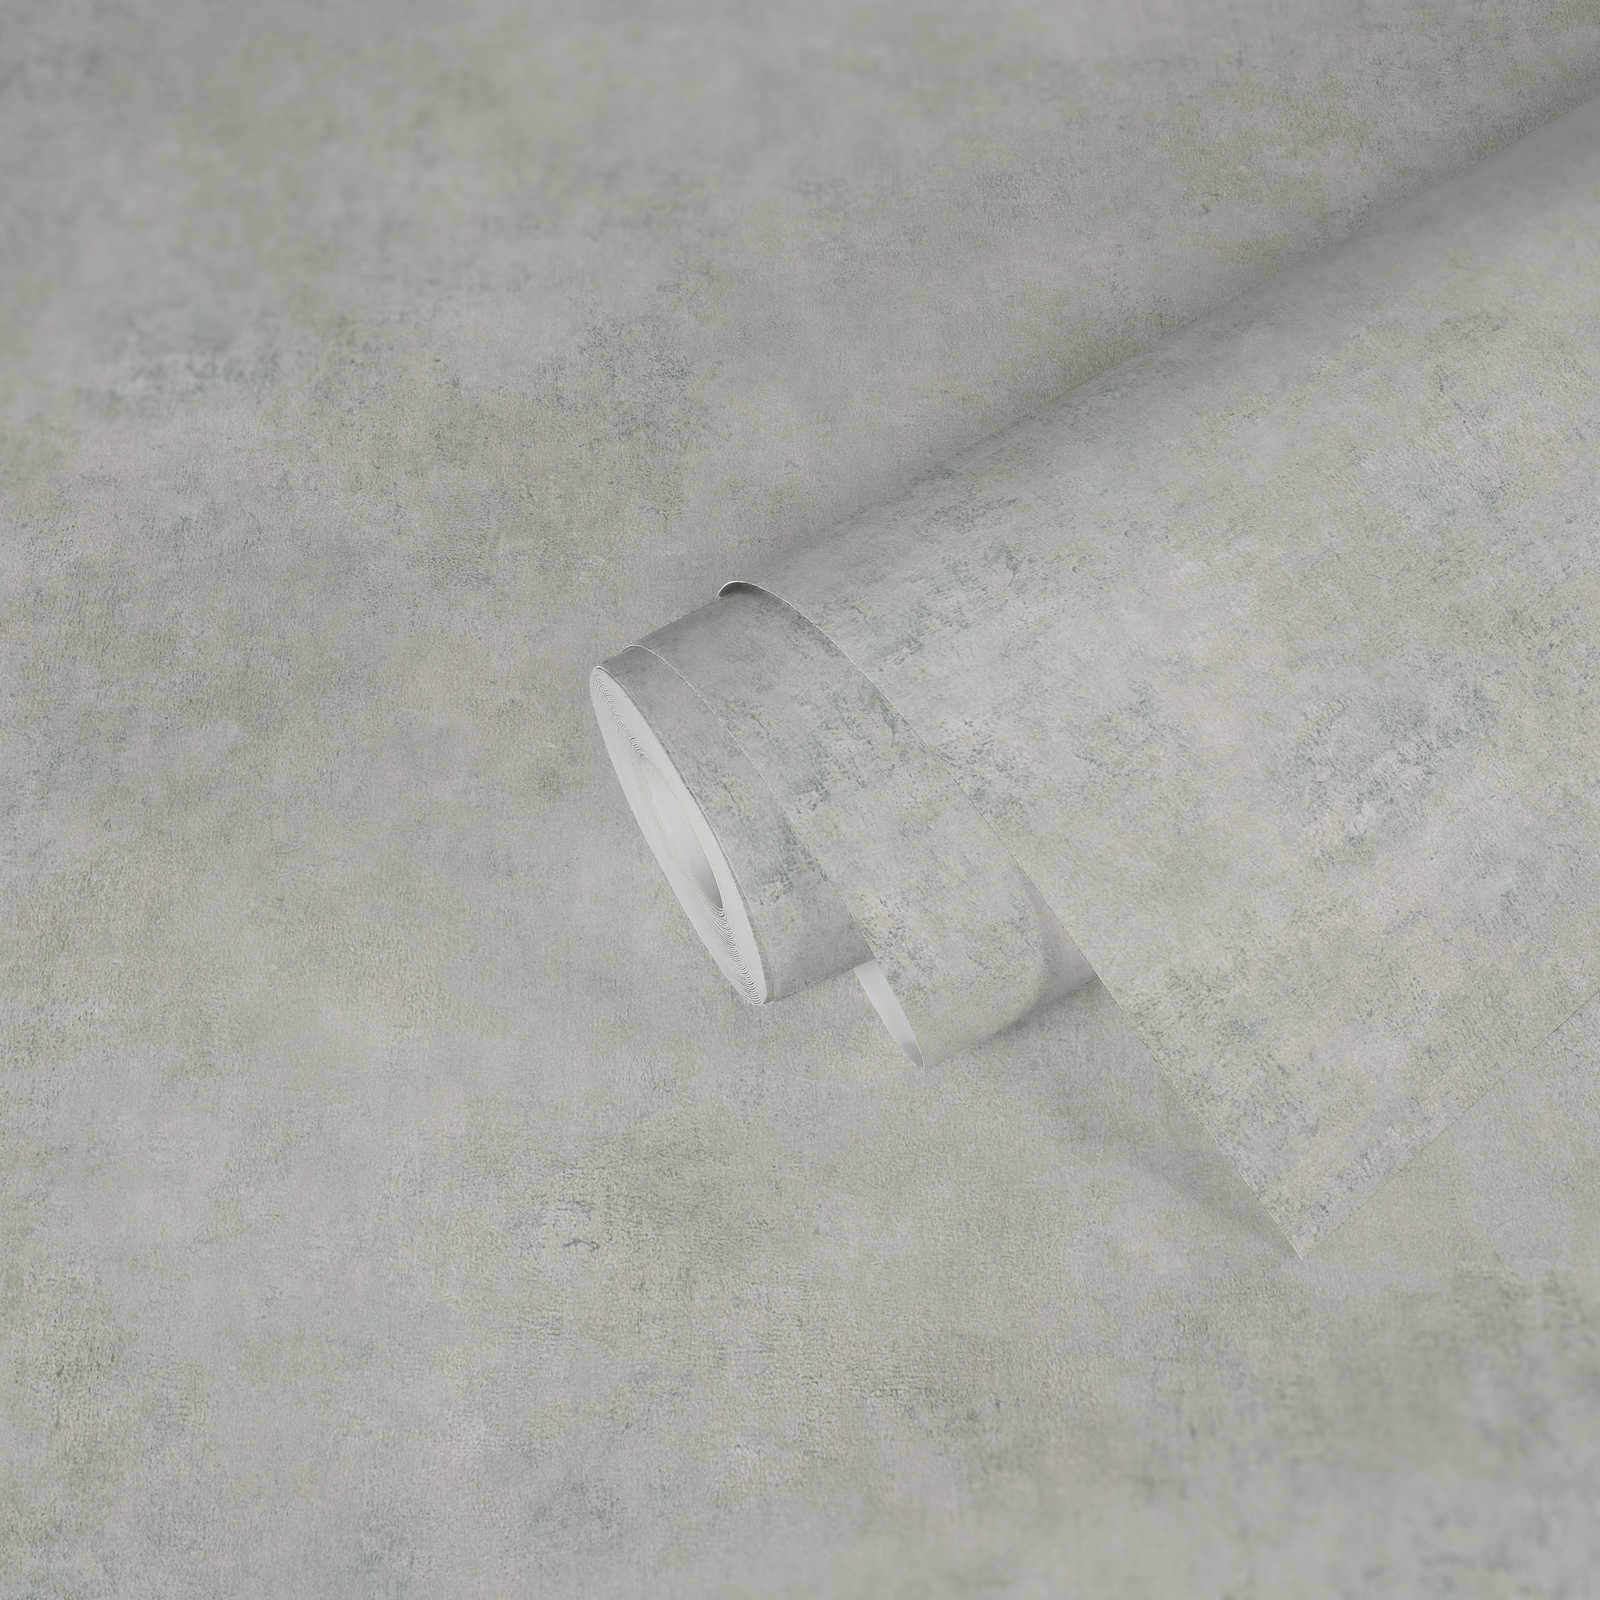             Self-adhesive wallpaper | concrete look in industrial style - grey
        